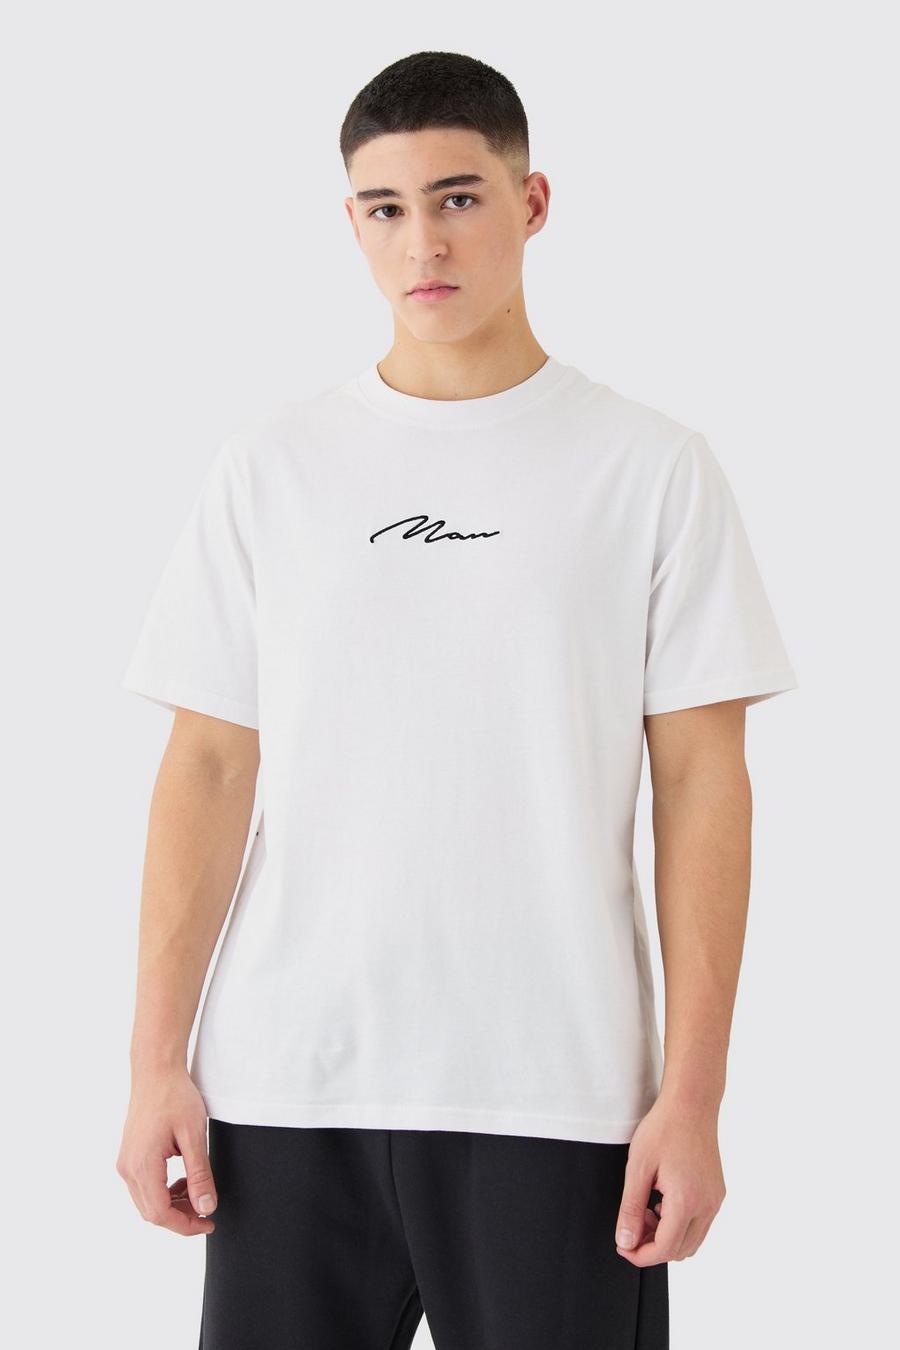 T-shirt MAN brodé, White image number 1